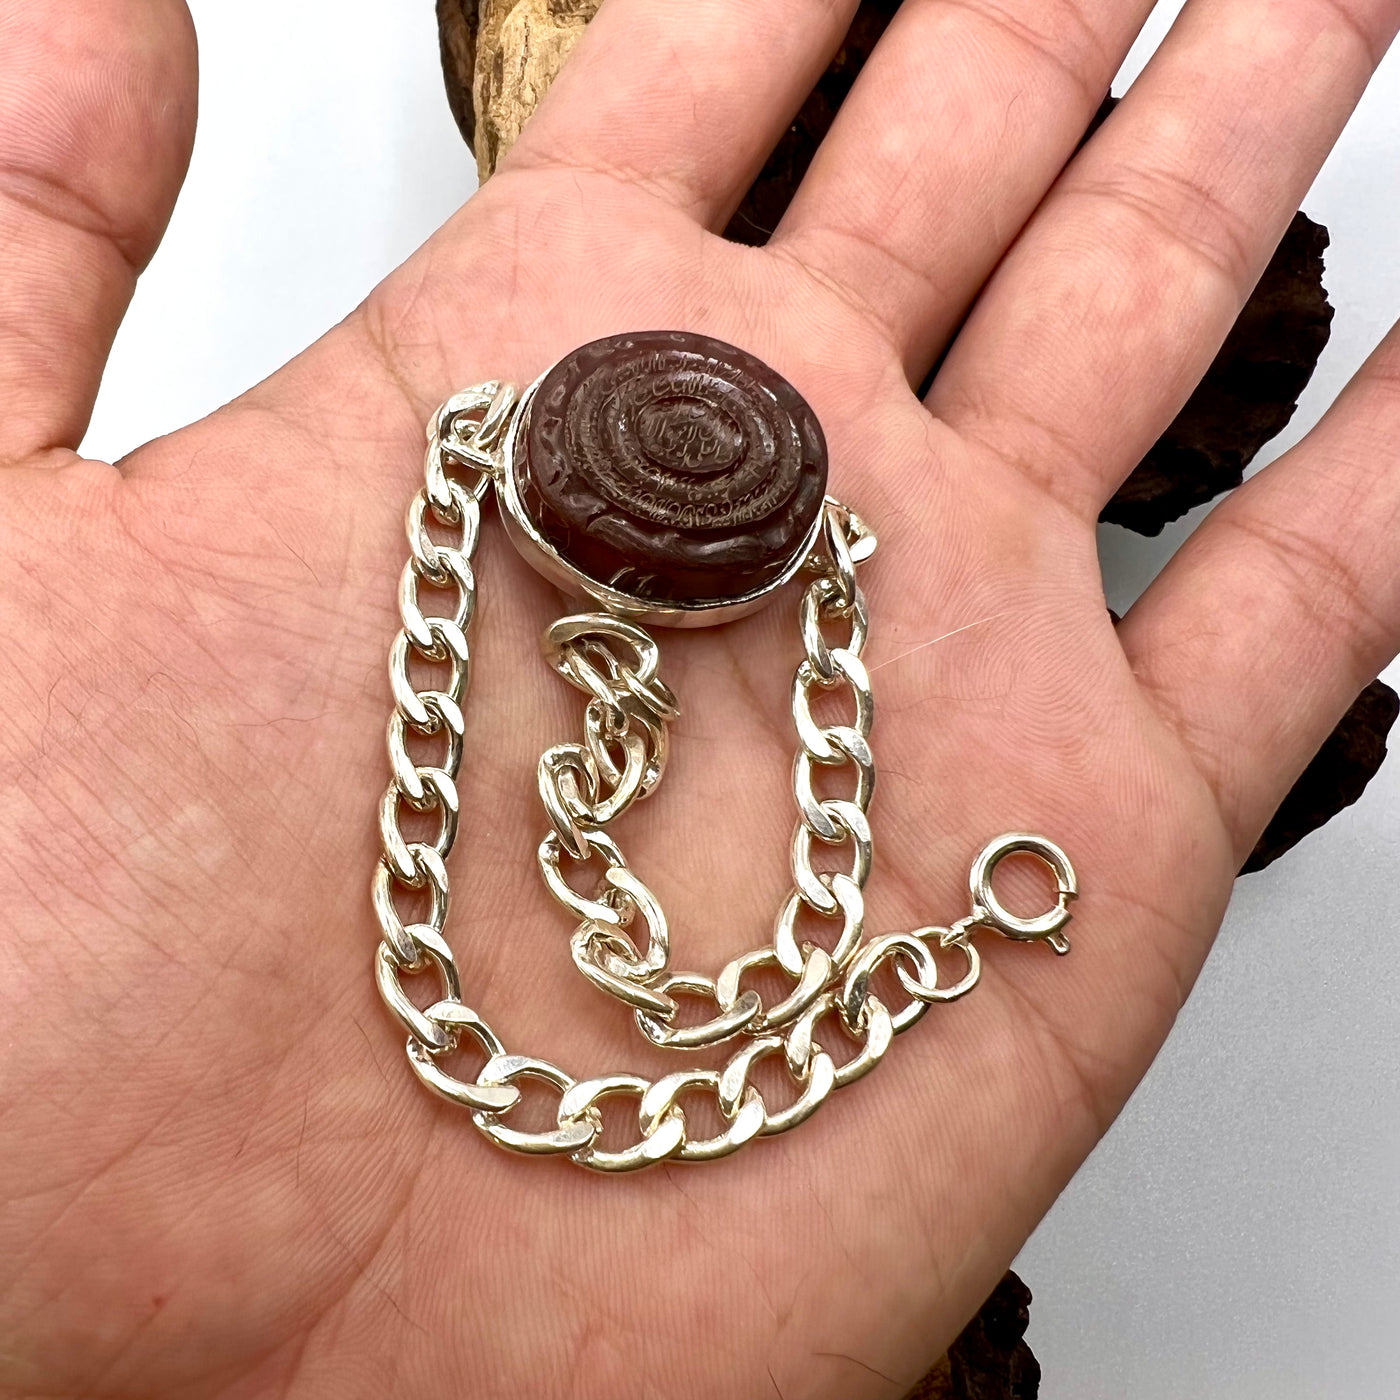 Ayatul Kursi Engraved Yemeni Aqeeq Stone Bracelet | Hand Carved Stone And Sterling Silver Bracelet - Al Ali Gems